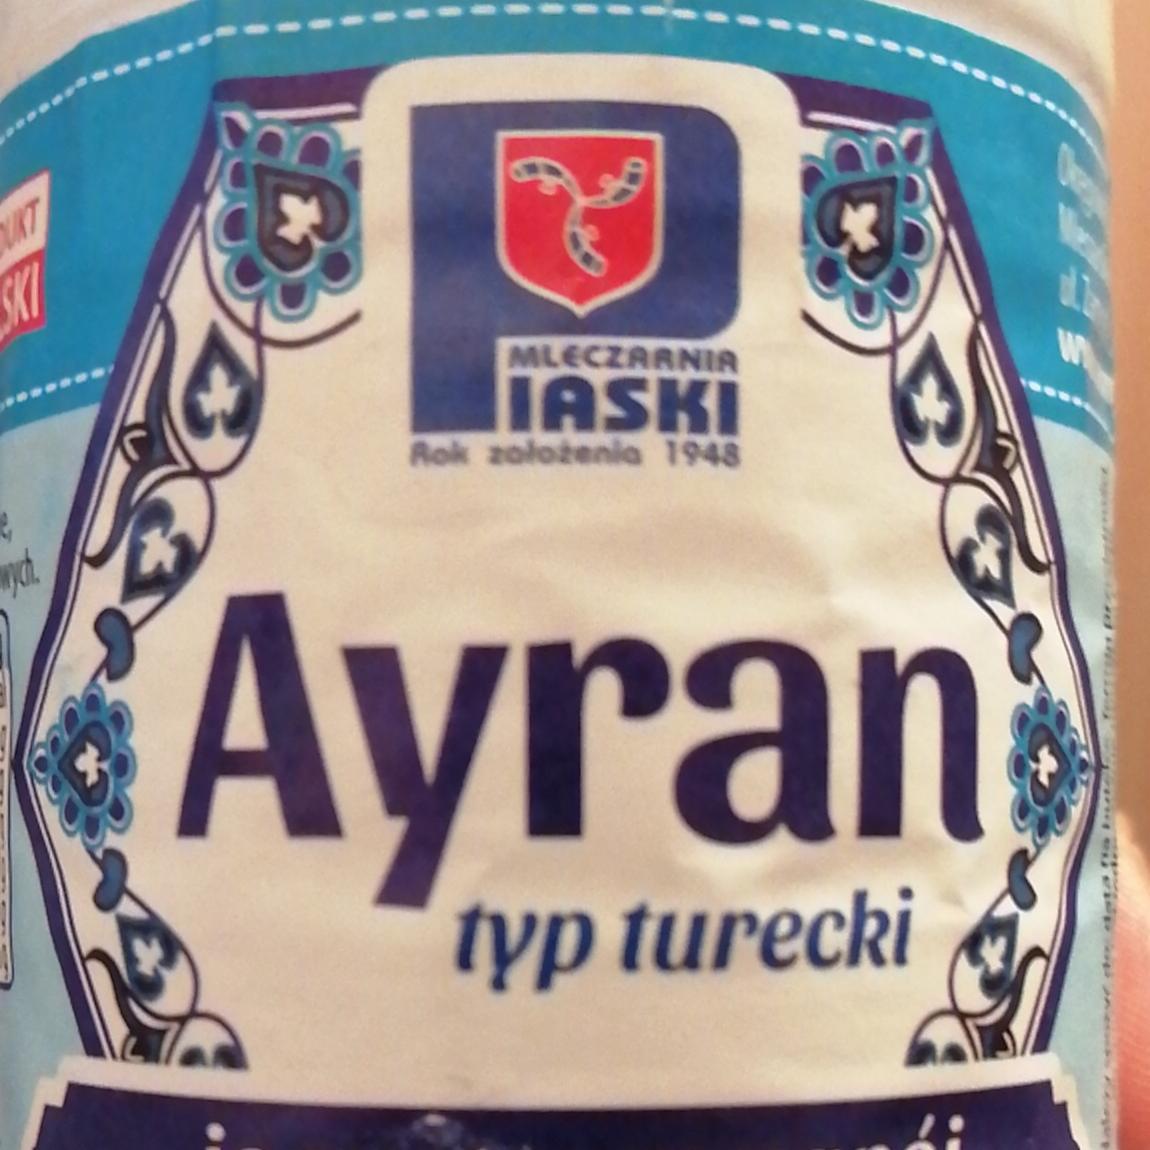 Zdjęcia - Ayran typ turecki OSM Piaski